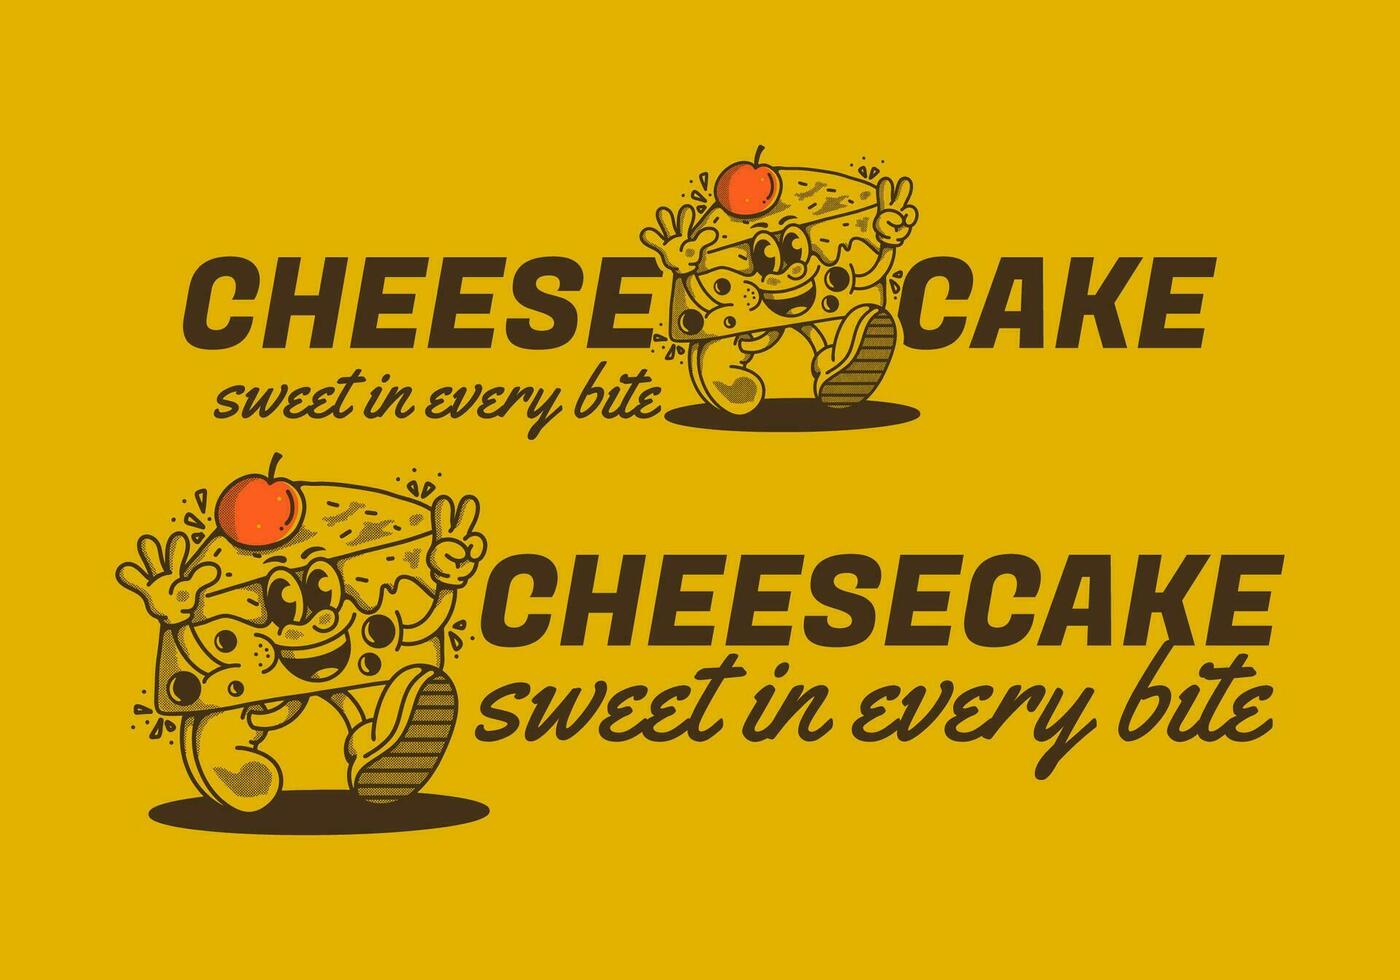 tarta de queso, dulce en cada morder. mascota personaje ilustración de caminando tarta de queso vector